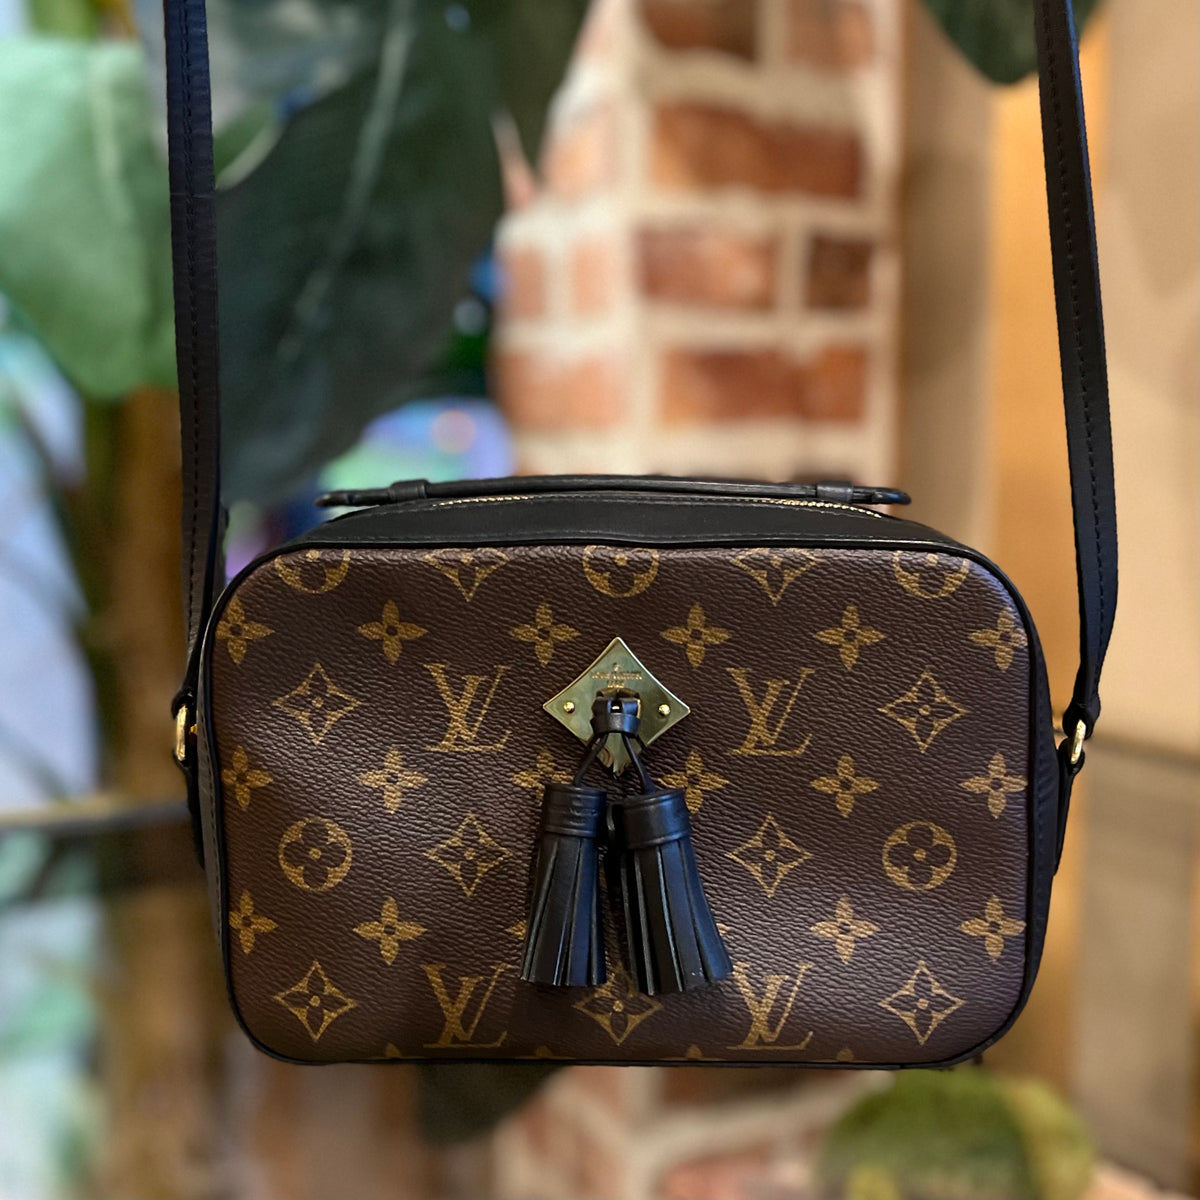 Louis Vuitton Saintonge Handbag Canvas